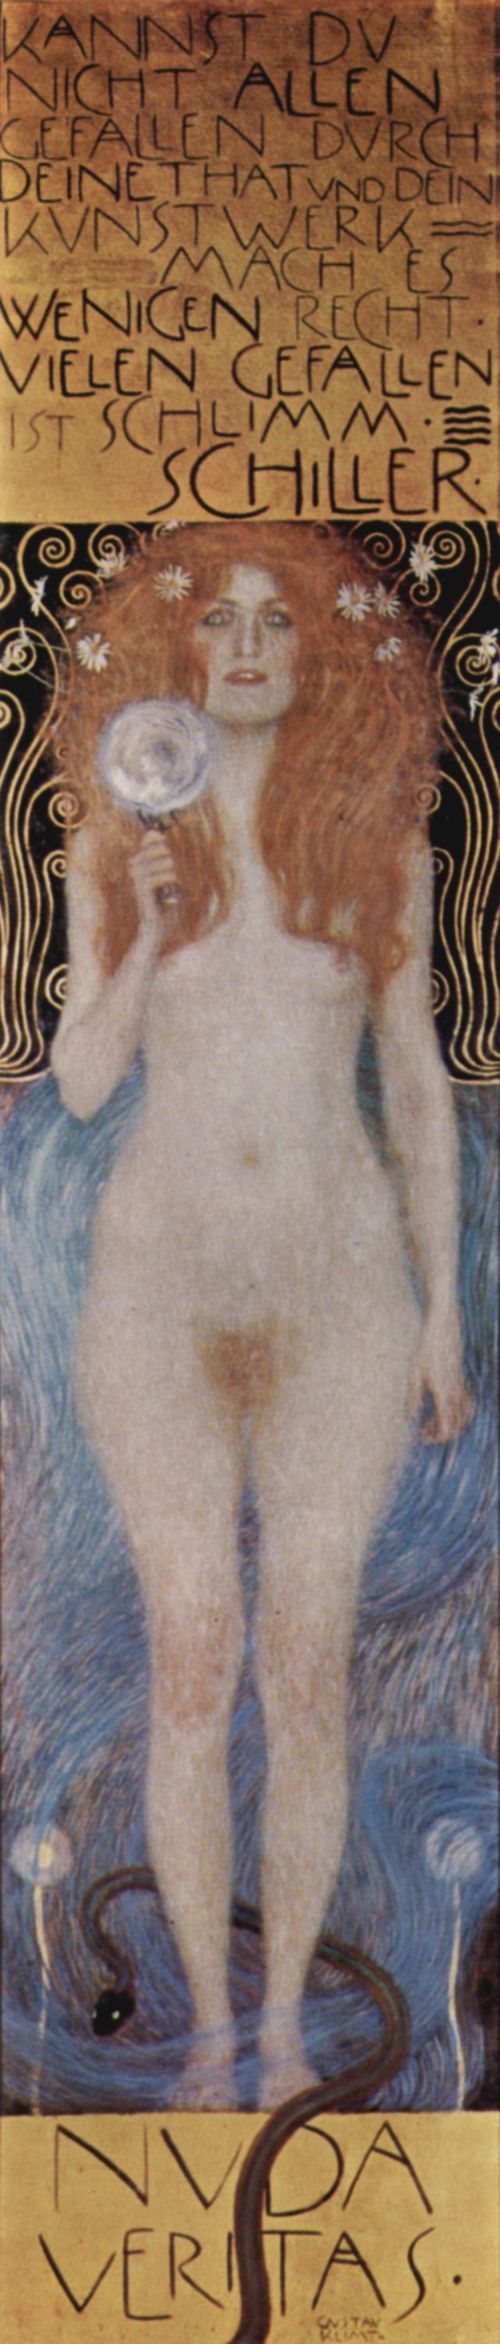 Klimt, Gustav: Nuda Veritas